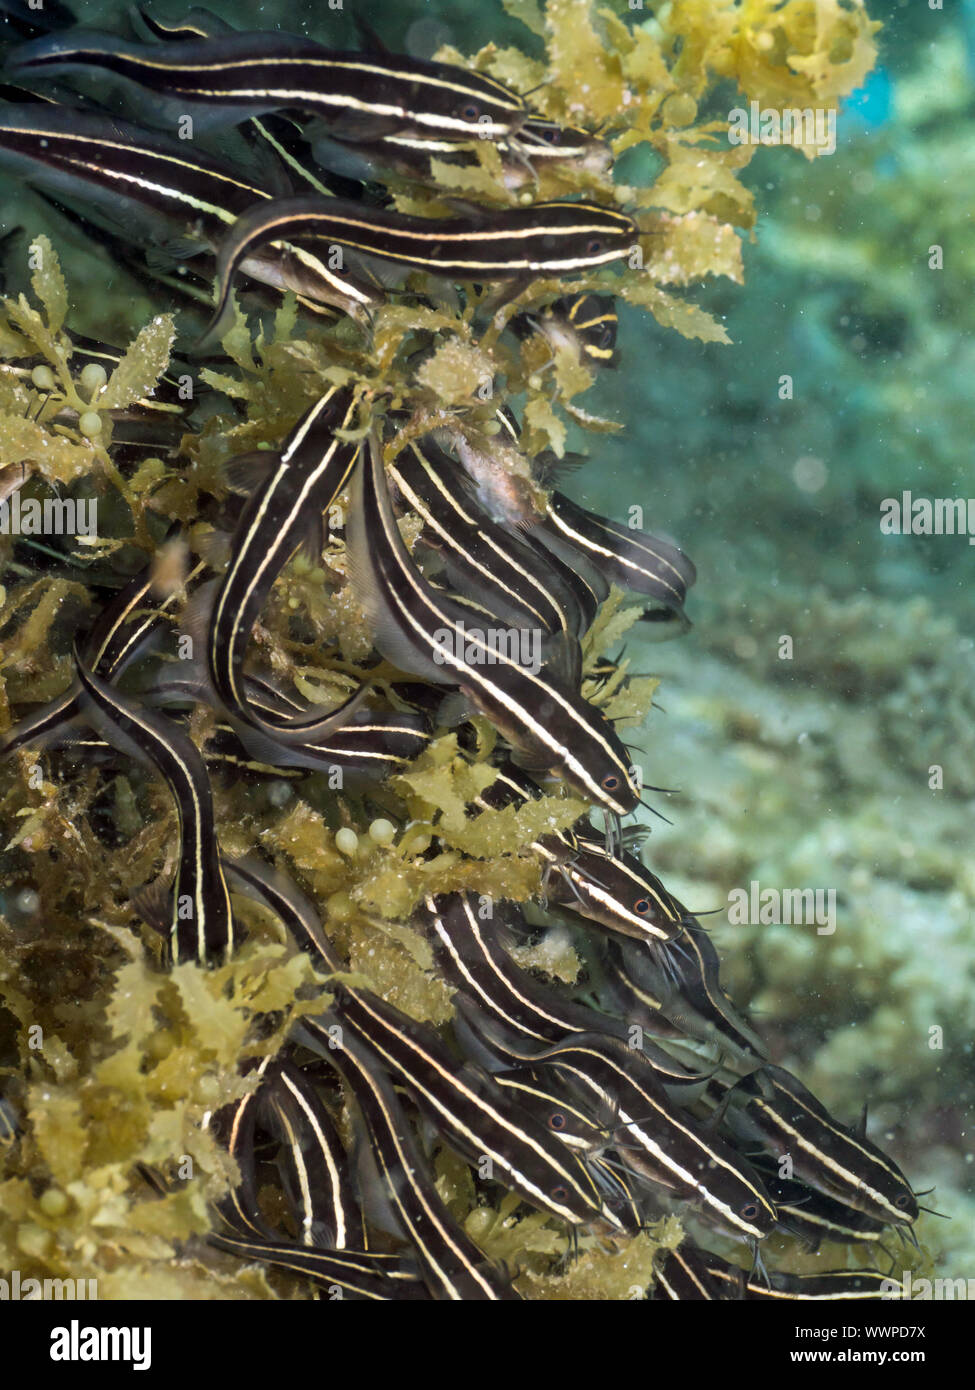 Striped eel catfish Stock Photo